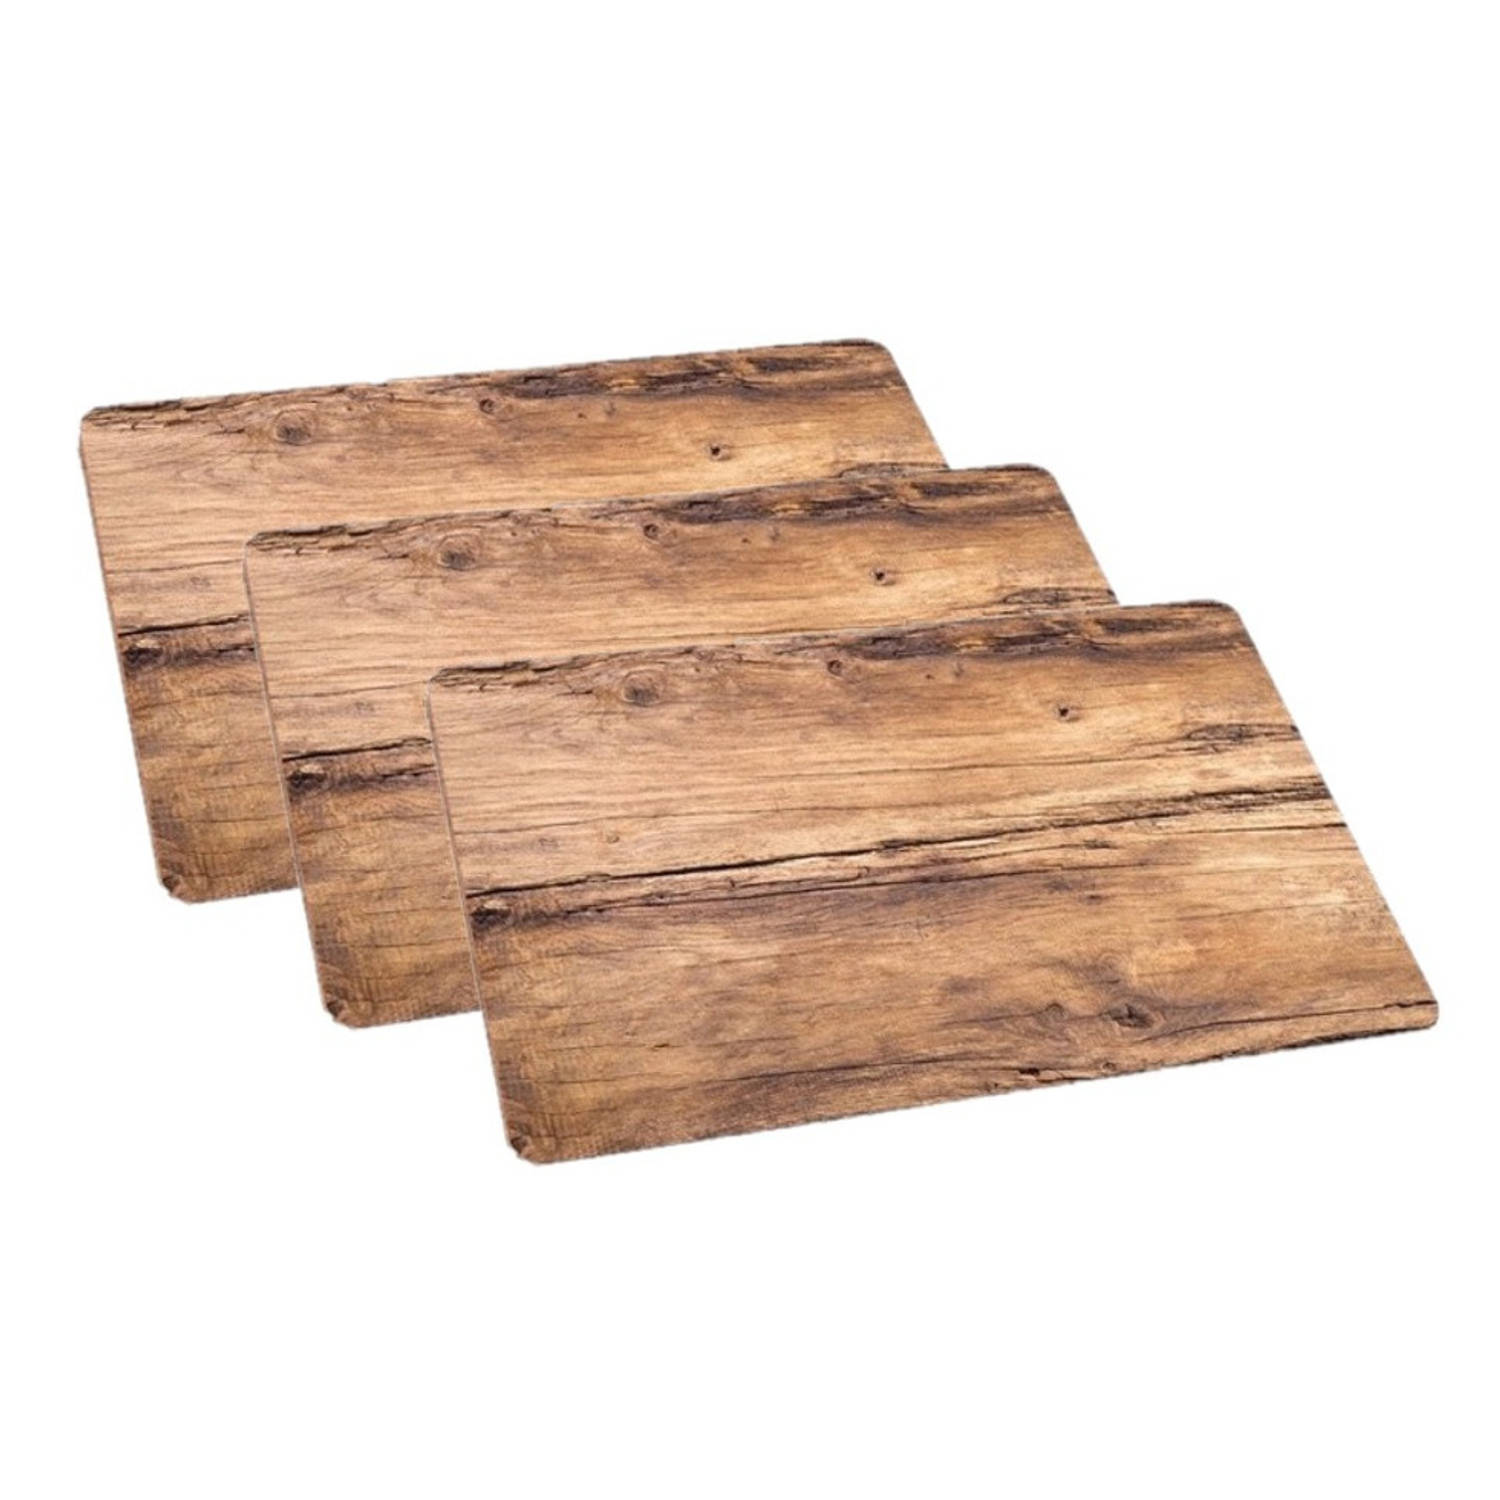 Set van 4x stuks placemats eikenhout opdruk 44 x 28,5 cm - Placemats